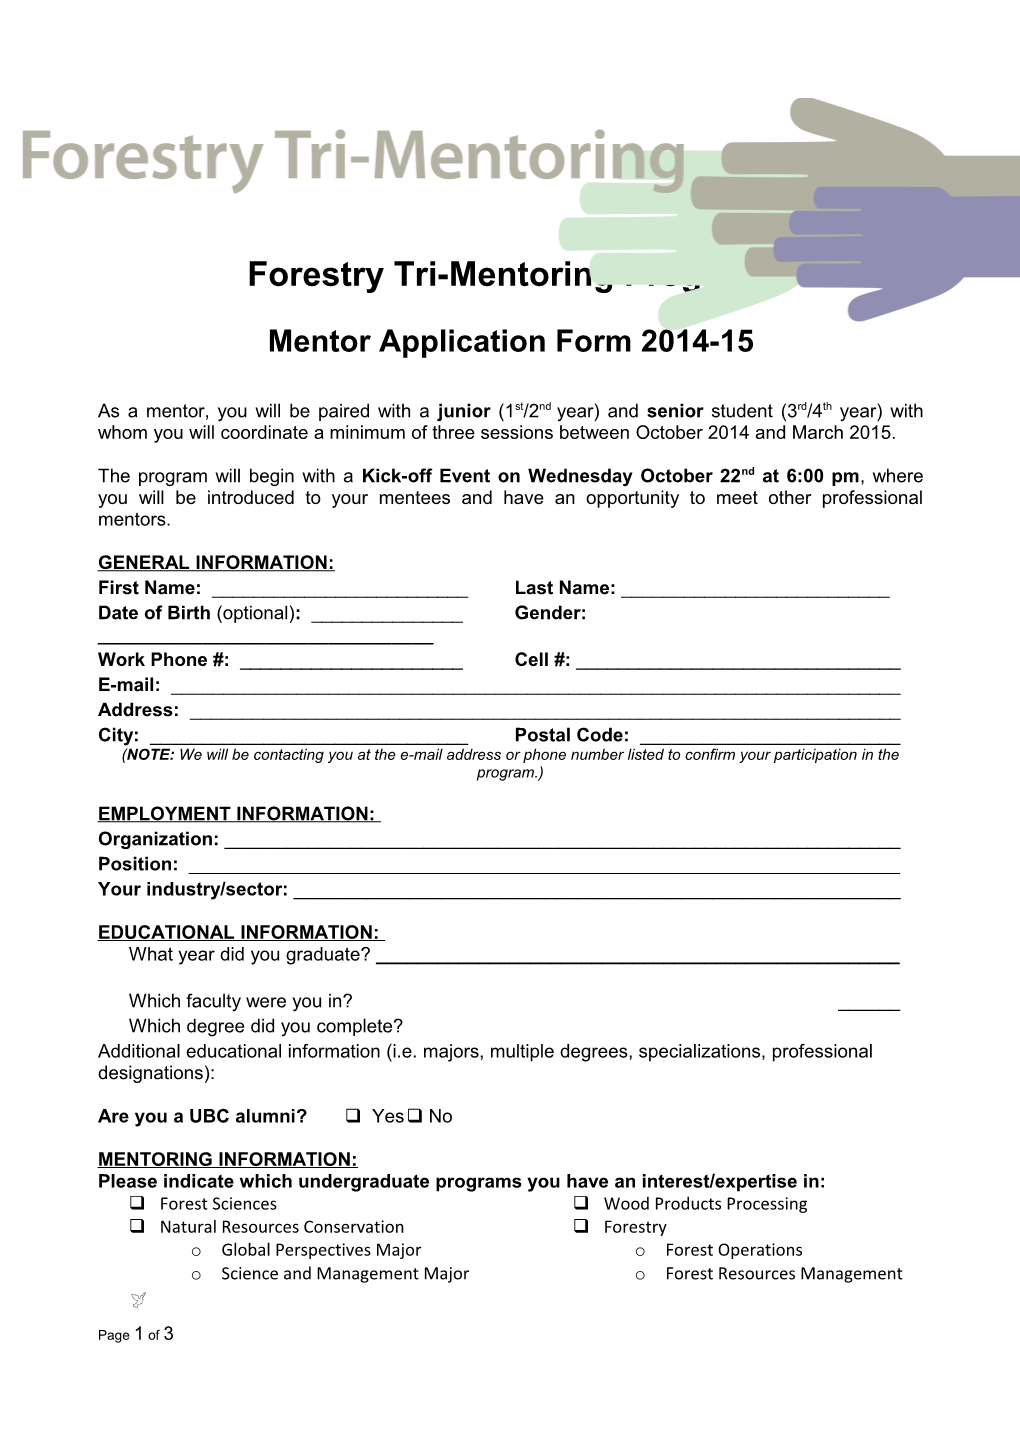 Forestry Tri-Mentoring Program